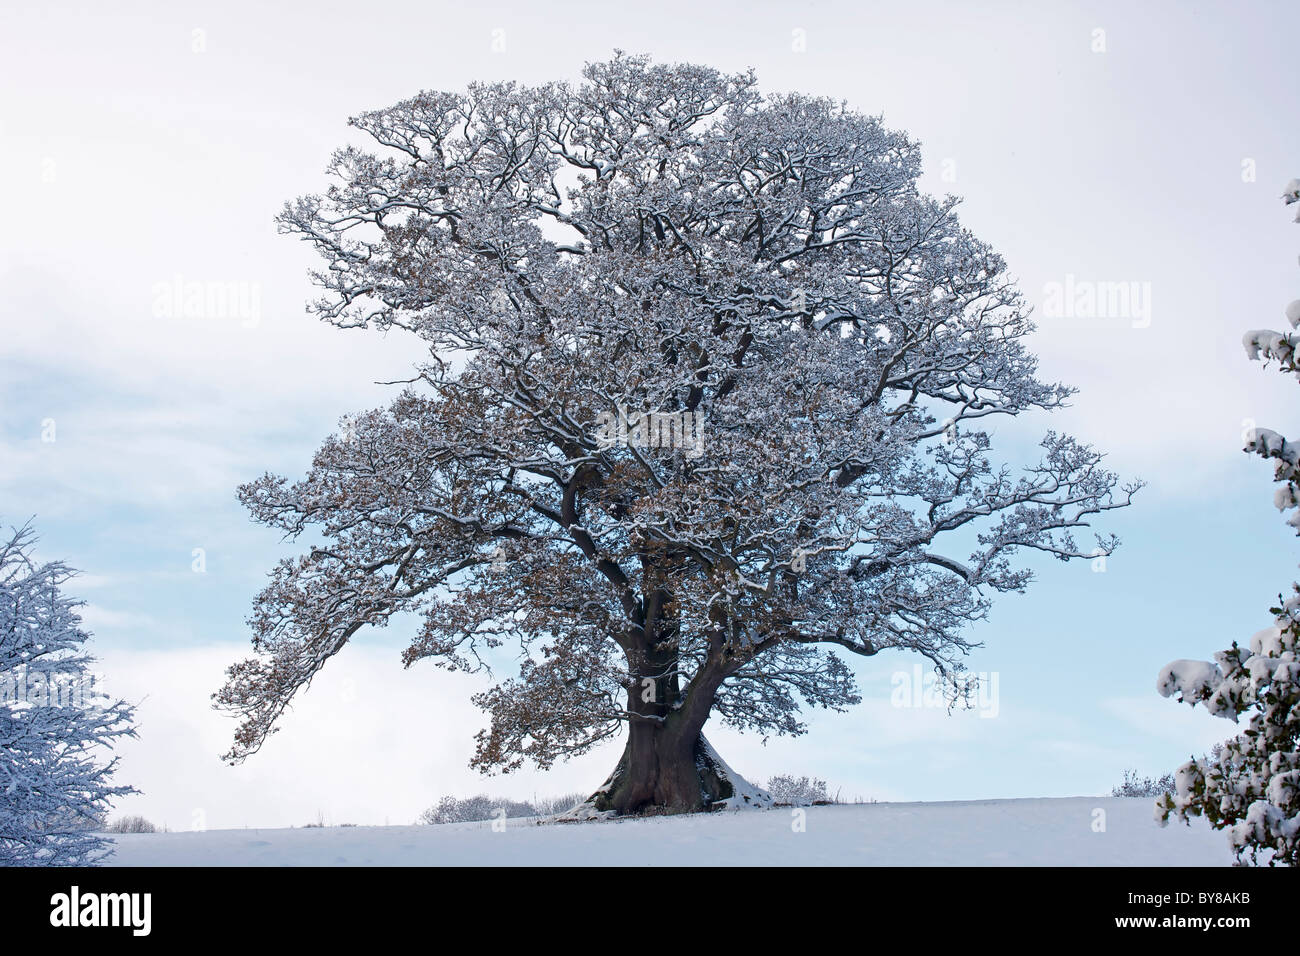 Winter scene - Snow on mature oak (Quercus) - Hereforeshire - UK - December 2010 Stock Photo